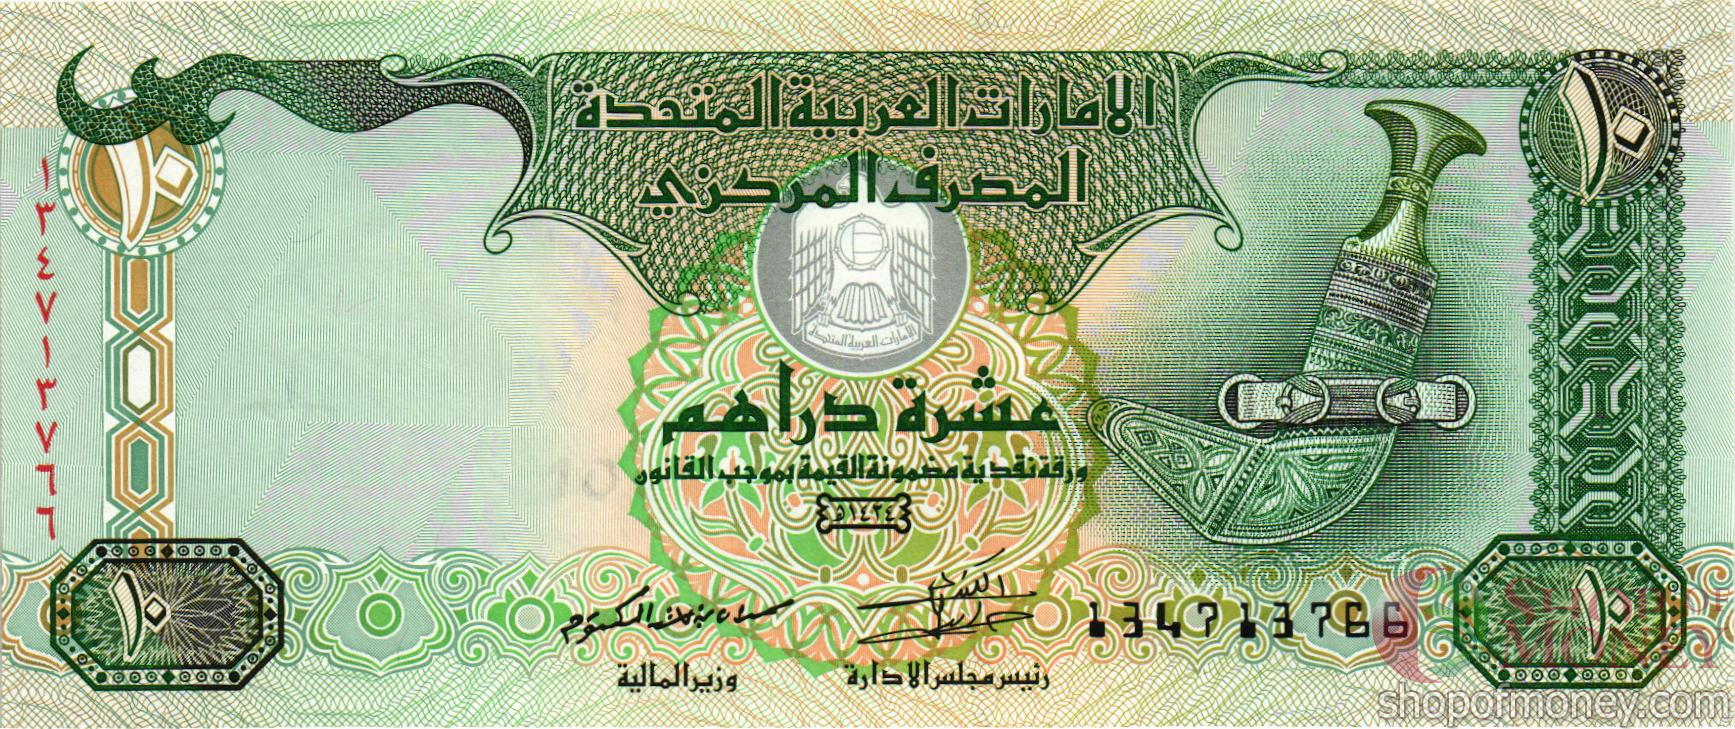 95 дирхам. 10 Дирхам ОАЭ. Бумажные банкноты ОАЭ. Объединённые арабские эмираты 10 дирхам. Купюры дирхамы ОАЭ.